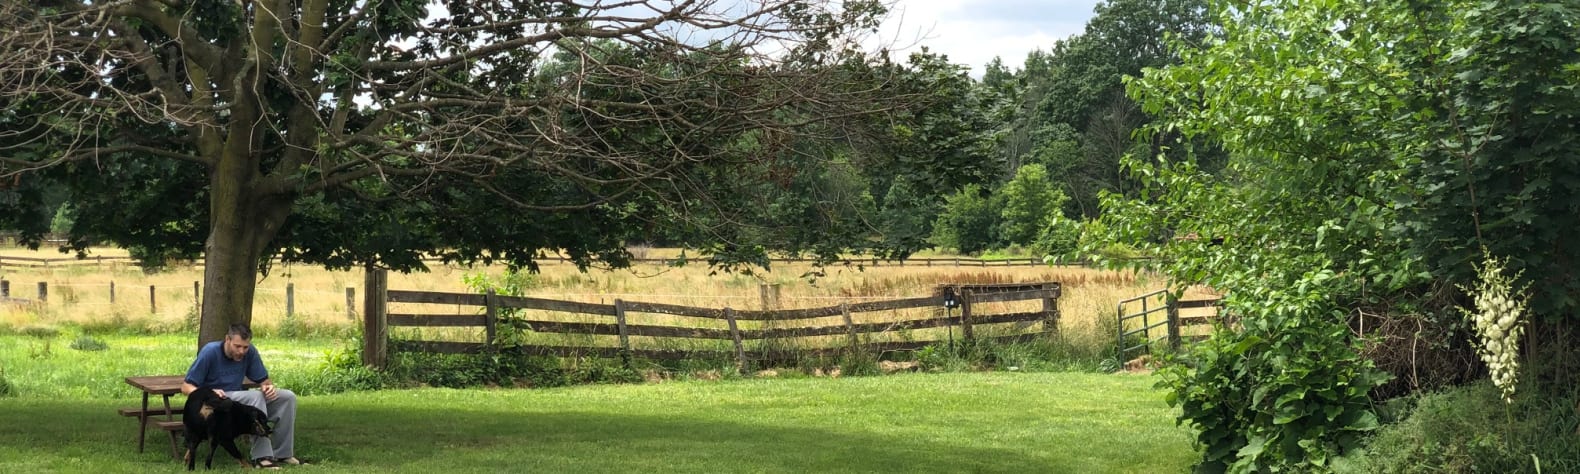 Private Farm Near Gettysburg